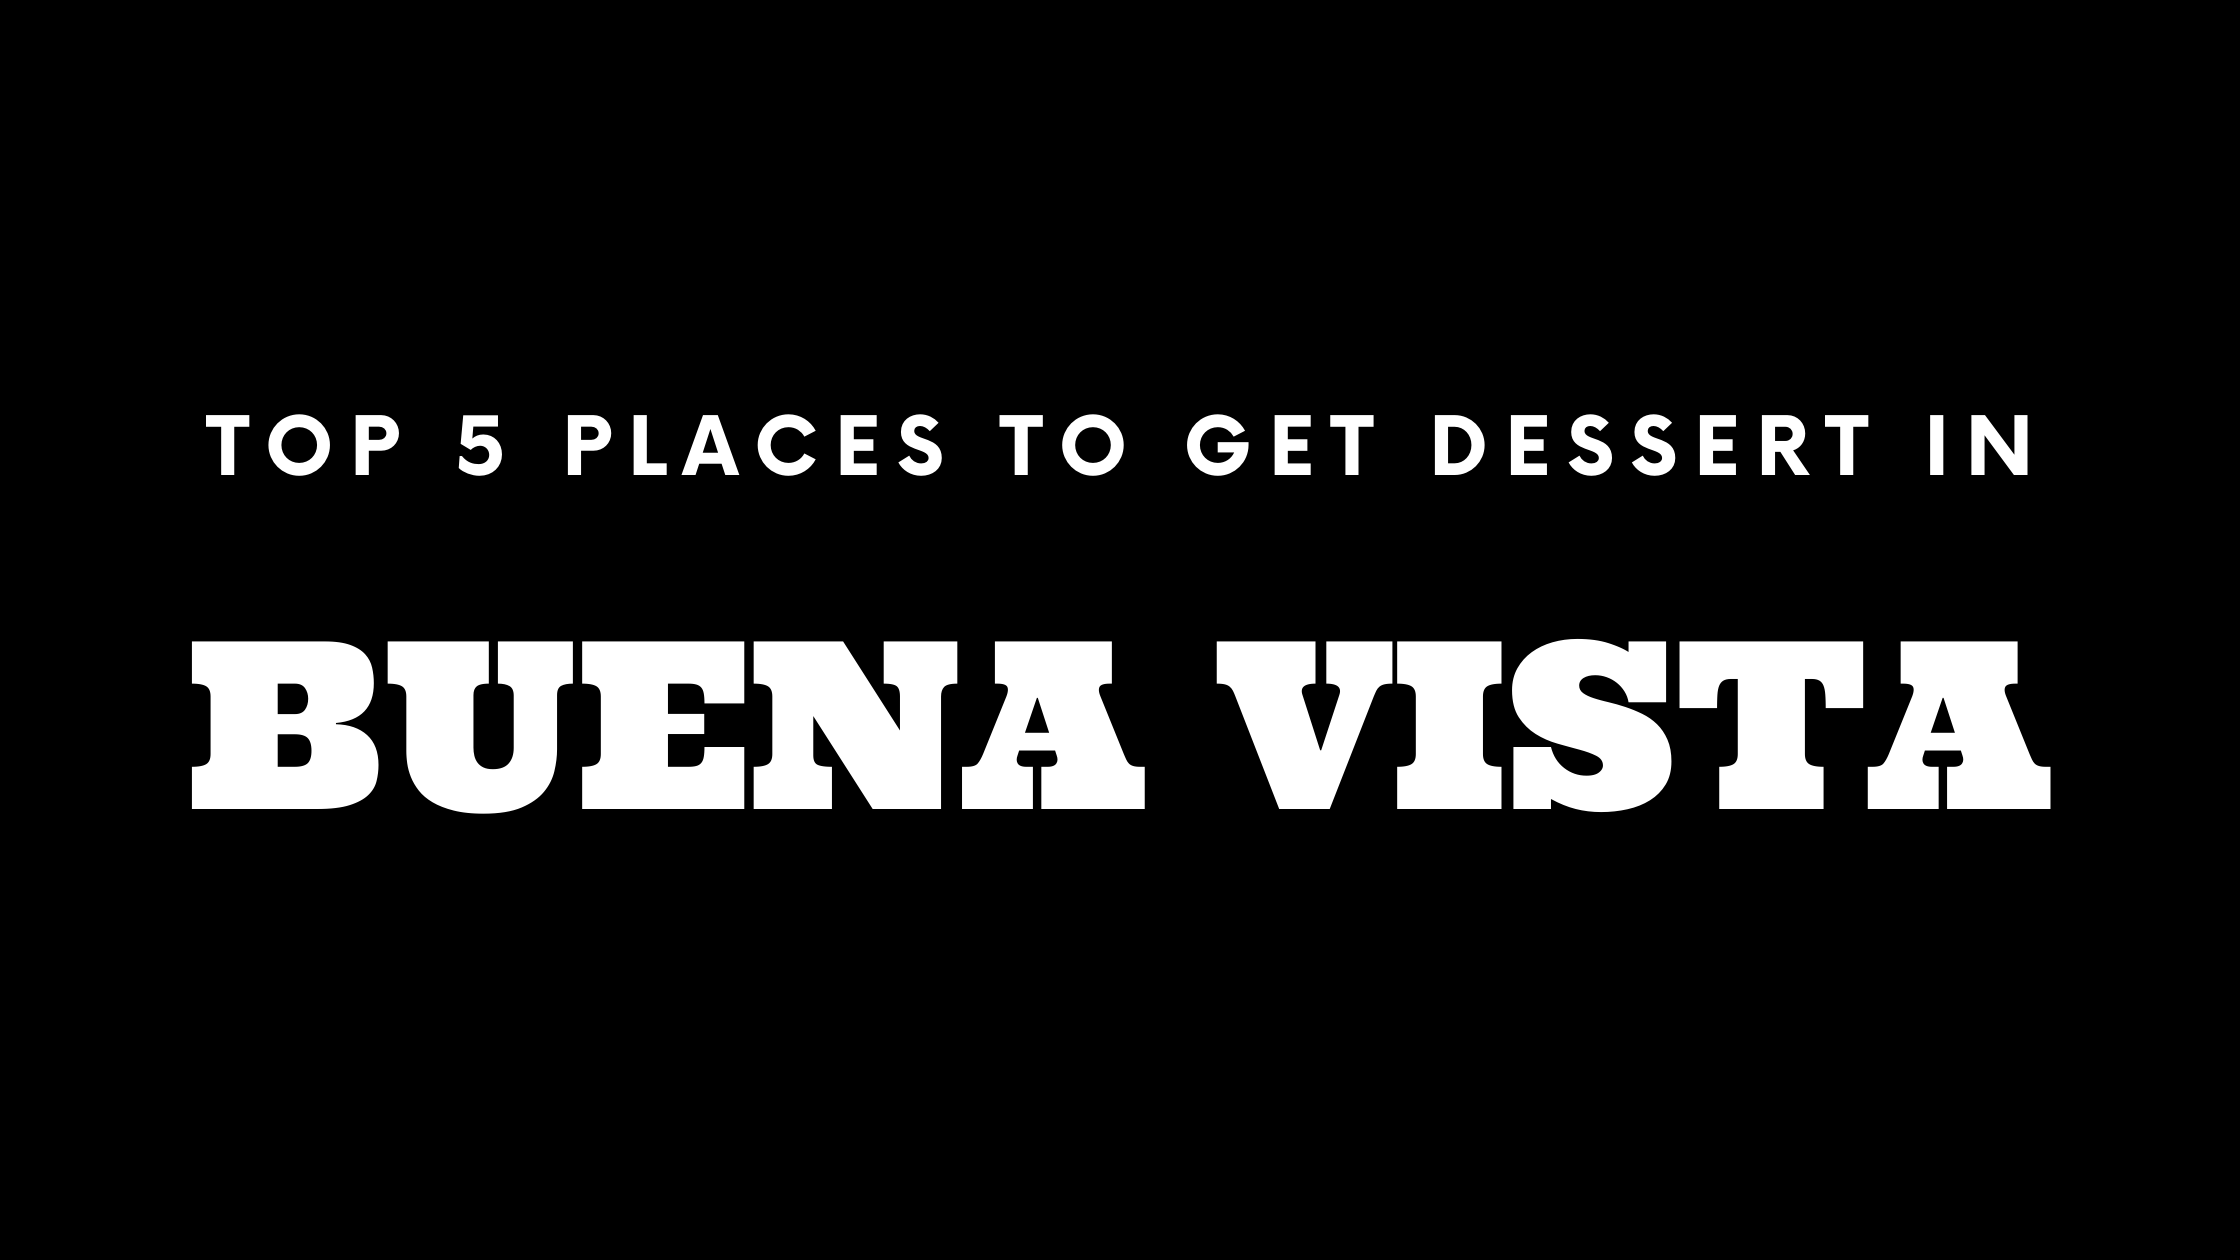 Top 5 Places to Get Dessert in Buena Vista